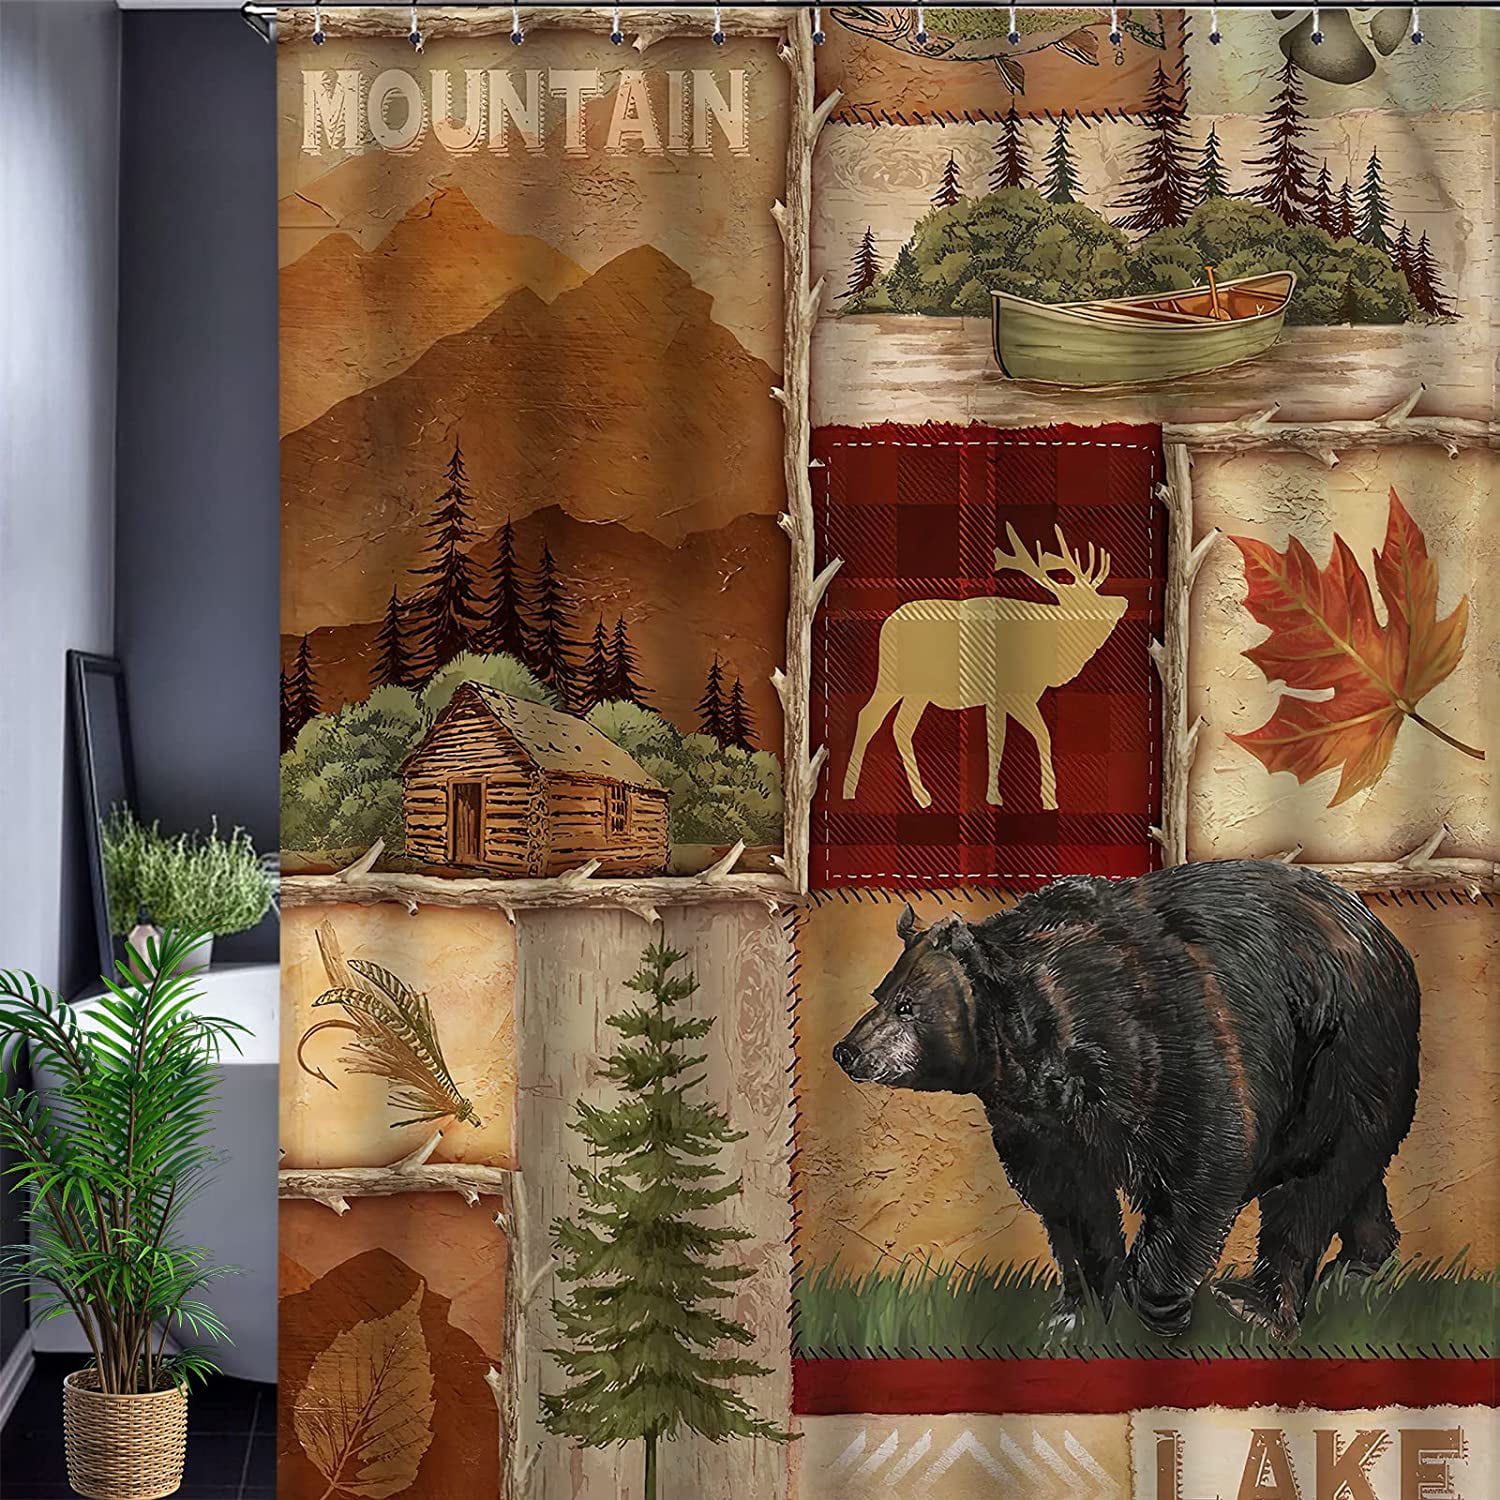 Cabin Shower Curtain Maple Leaf Fishing Moose Deer Bear Country Rustic Curtains Waterproof Bath 72x72 Inch Com